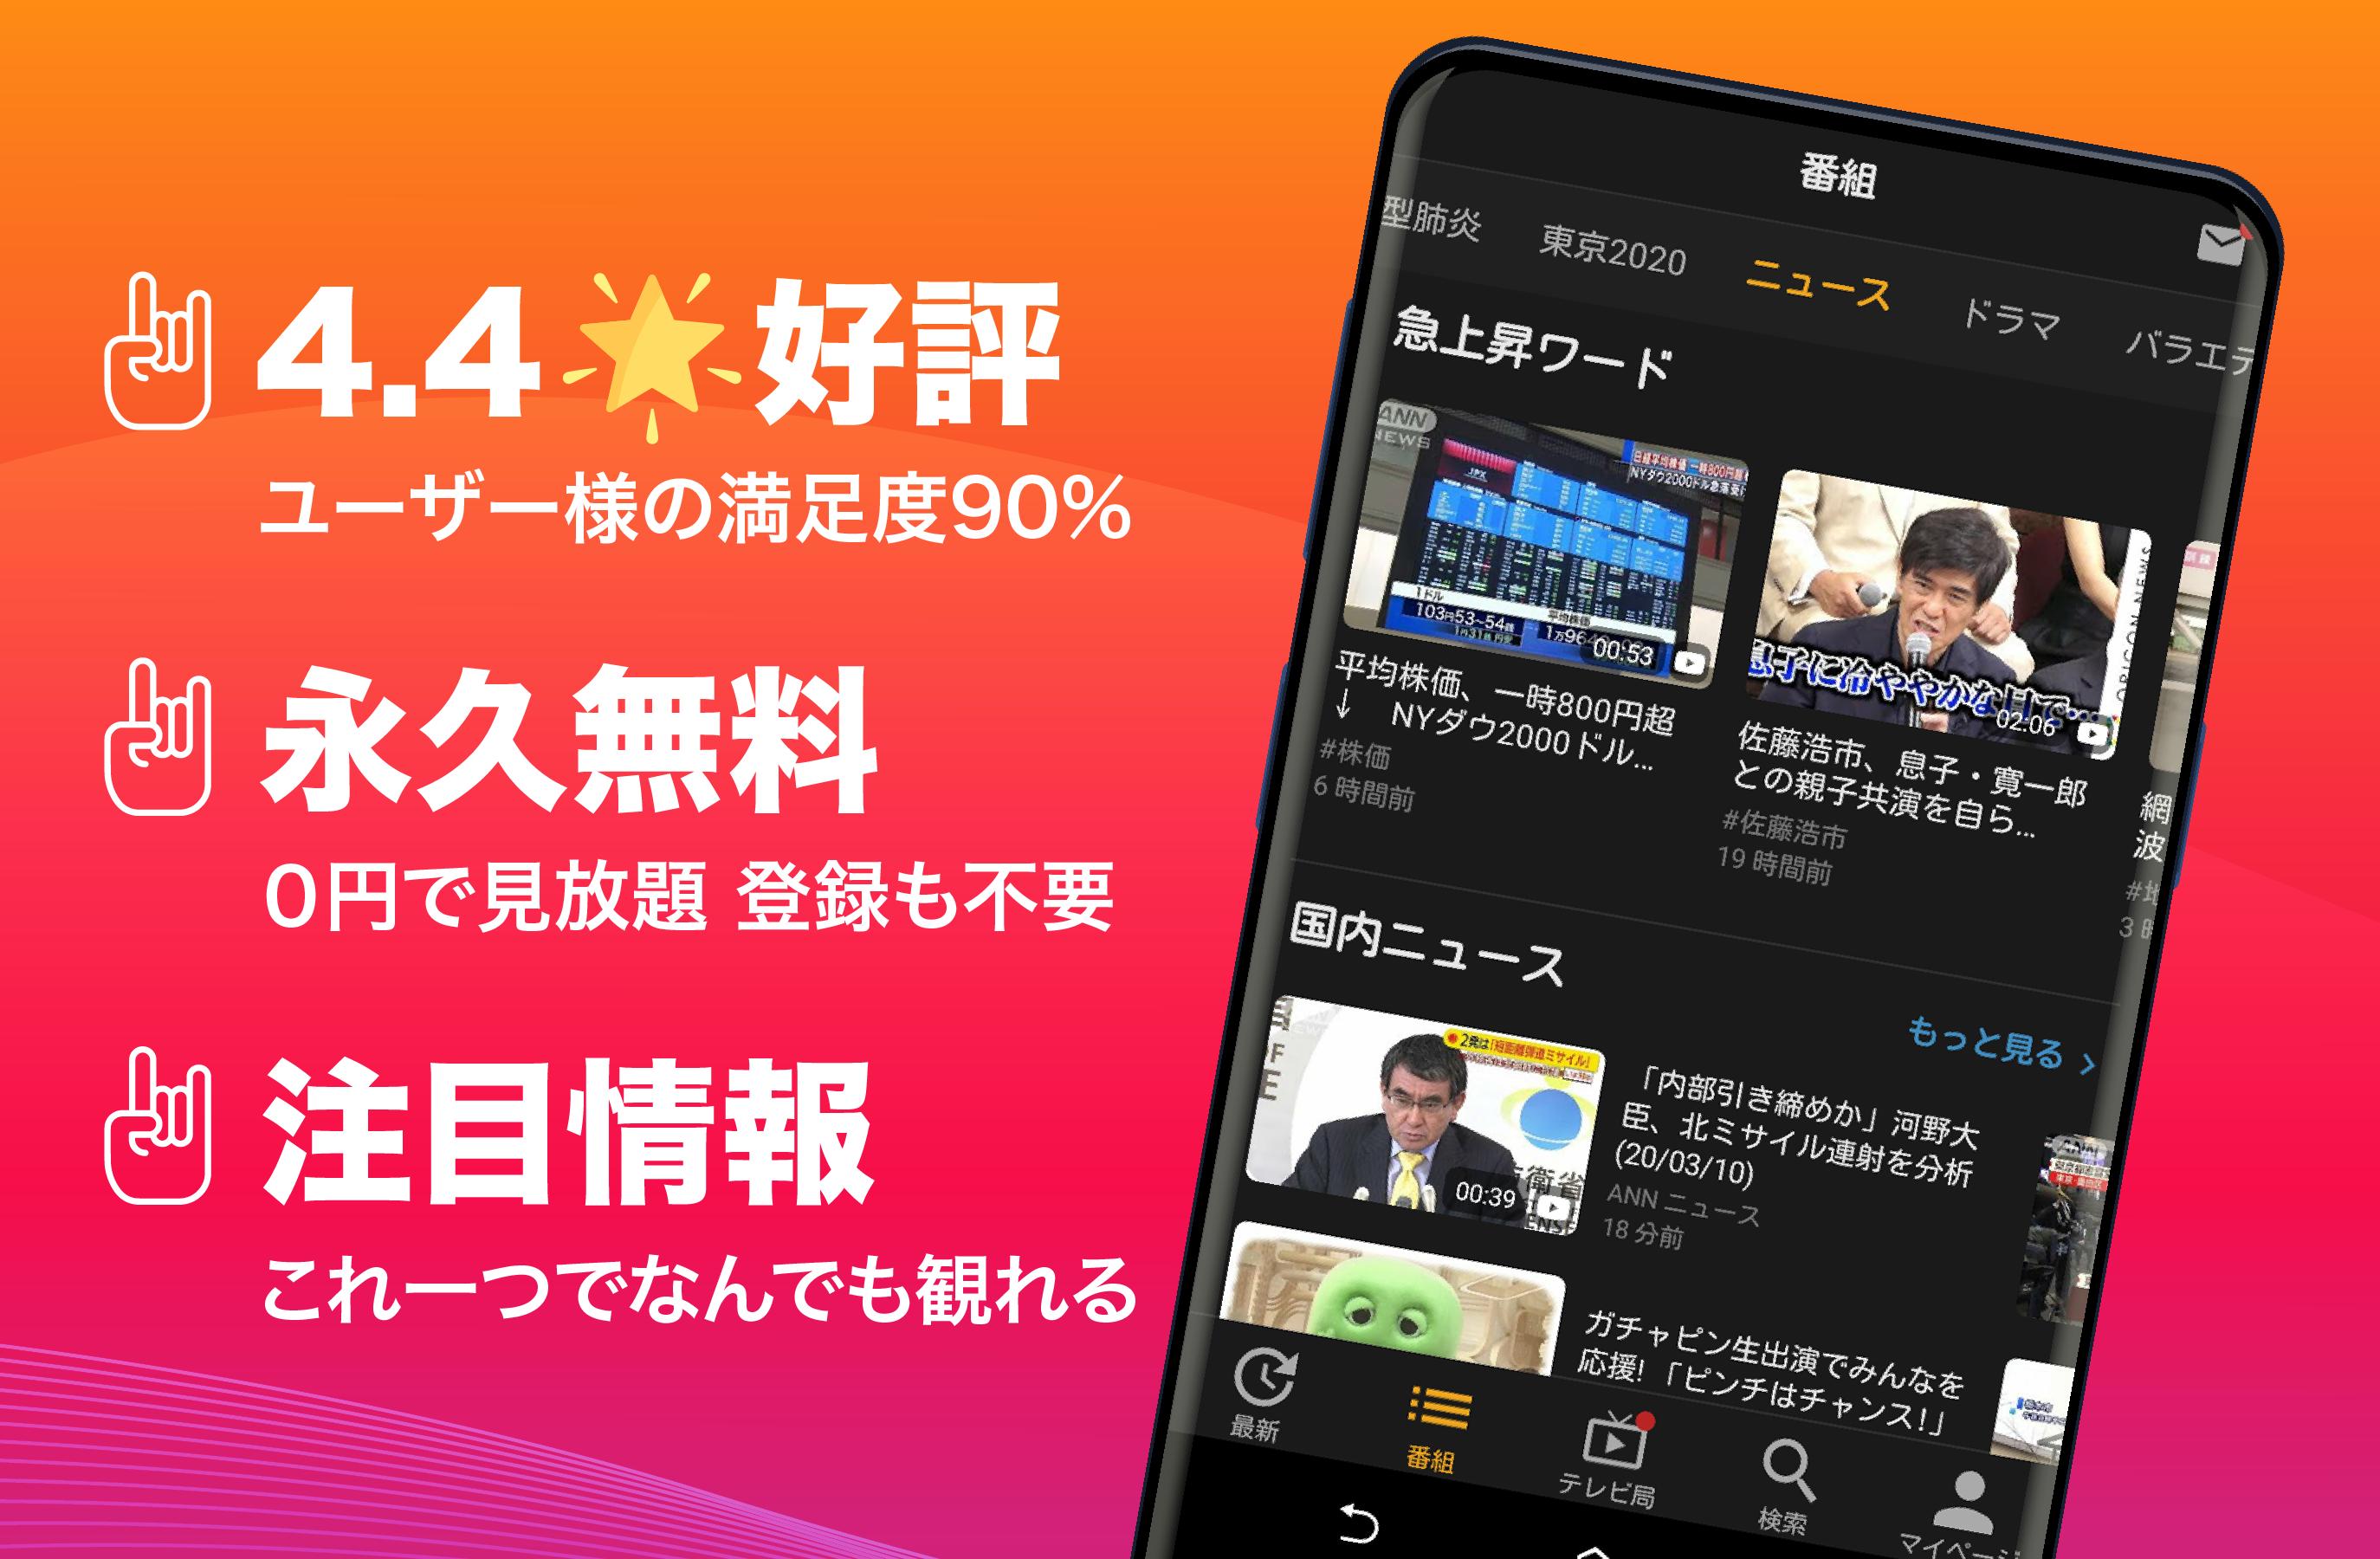 (JP)テレビ 9.21 Screenshot 16